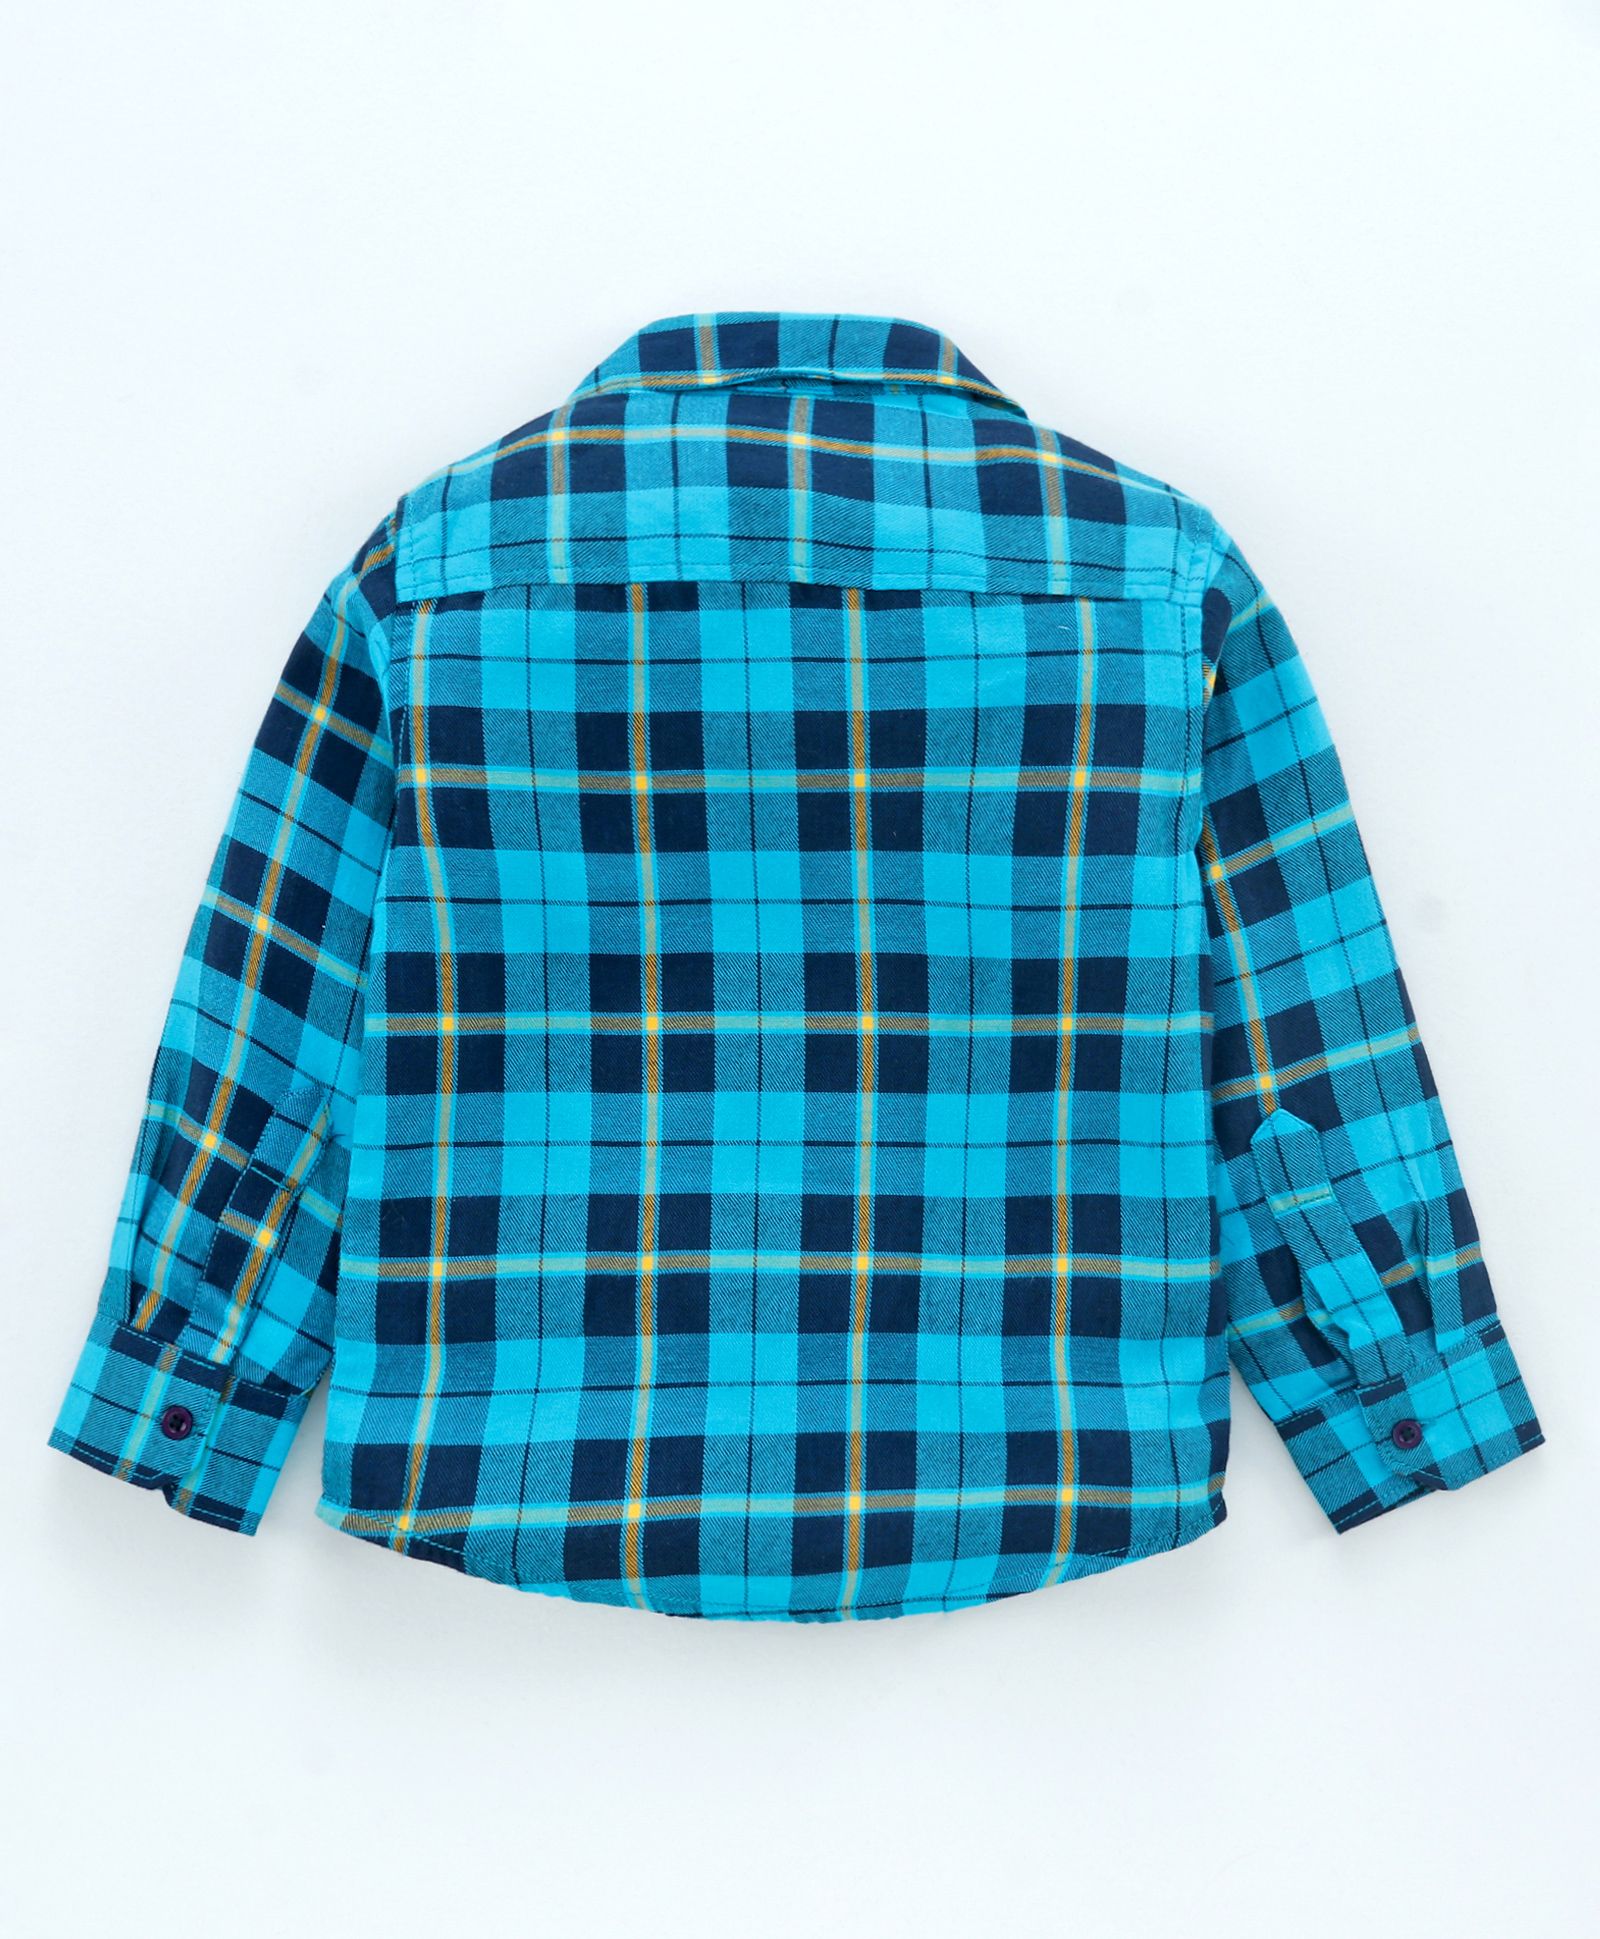 Full Sleeve Checkered Bio Wash Shirt - Blue